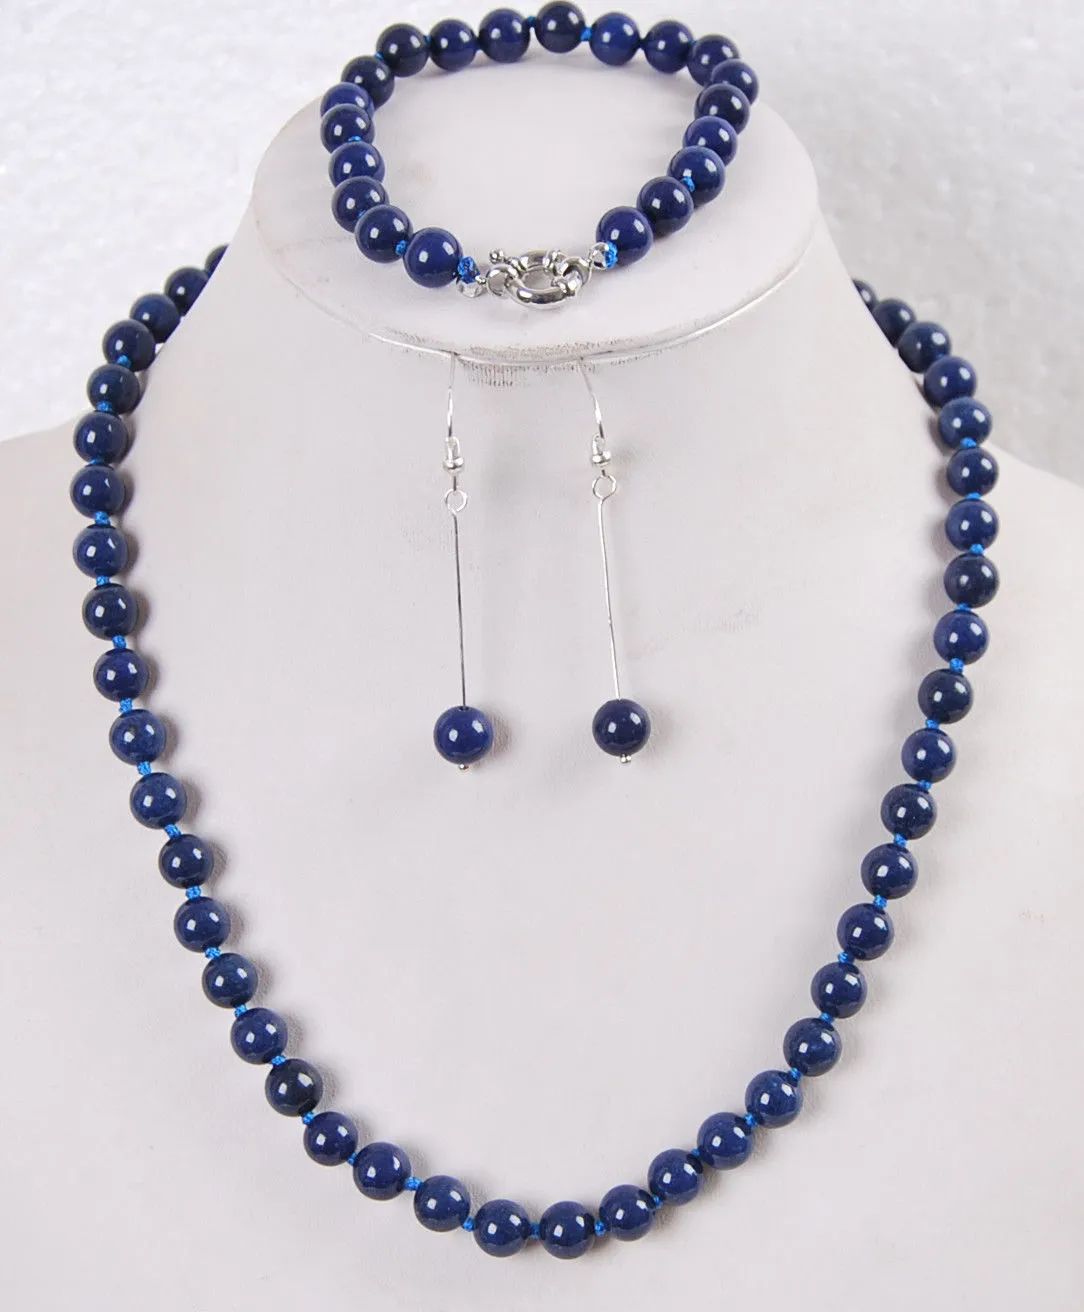 8mm Egyptian Lapis Lazuli Round Beads necklace bracelet earrings Jewelry set